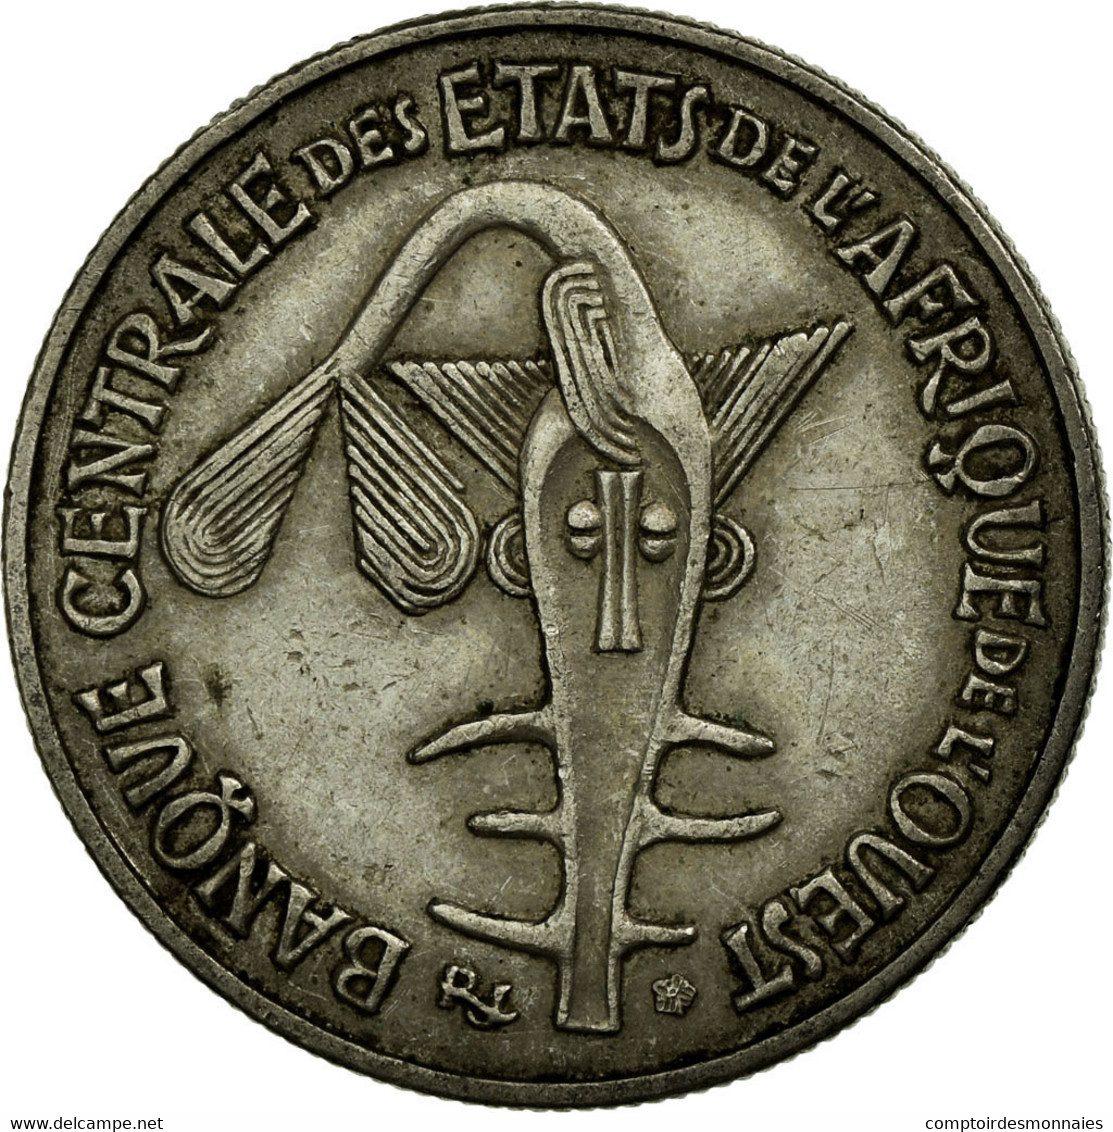 Monnaie, West African States, 50 Francs, 1972, TTB, Copper-nickel, KM:6 - Ivoorkust